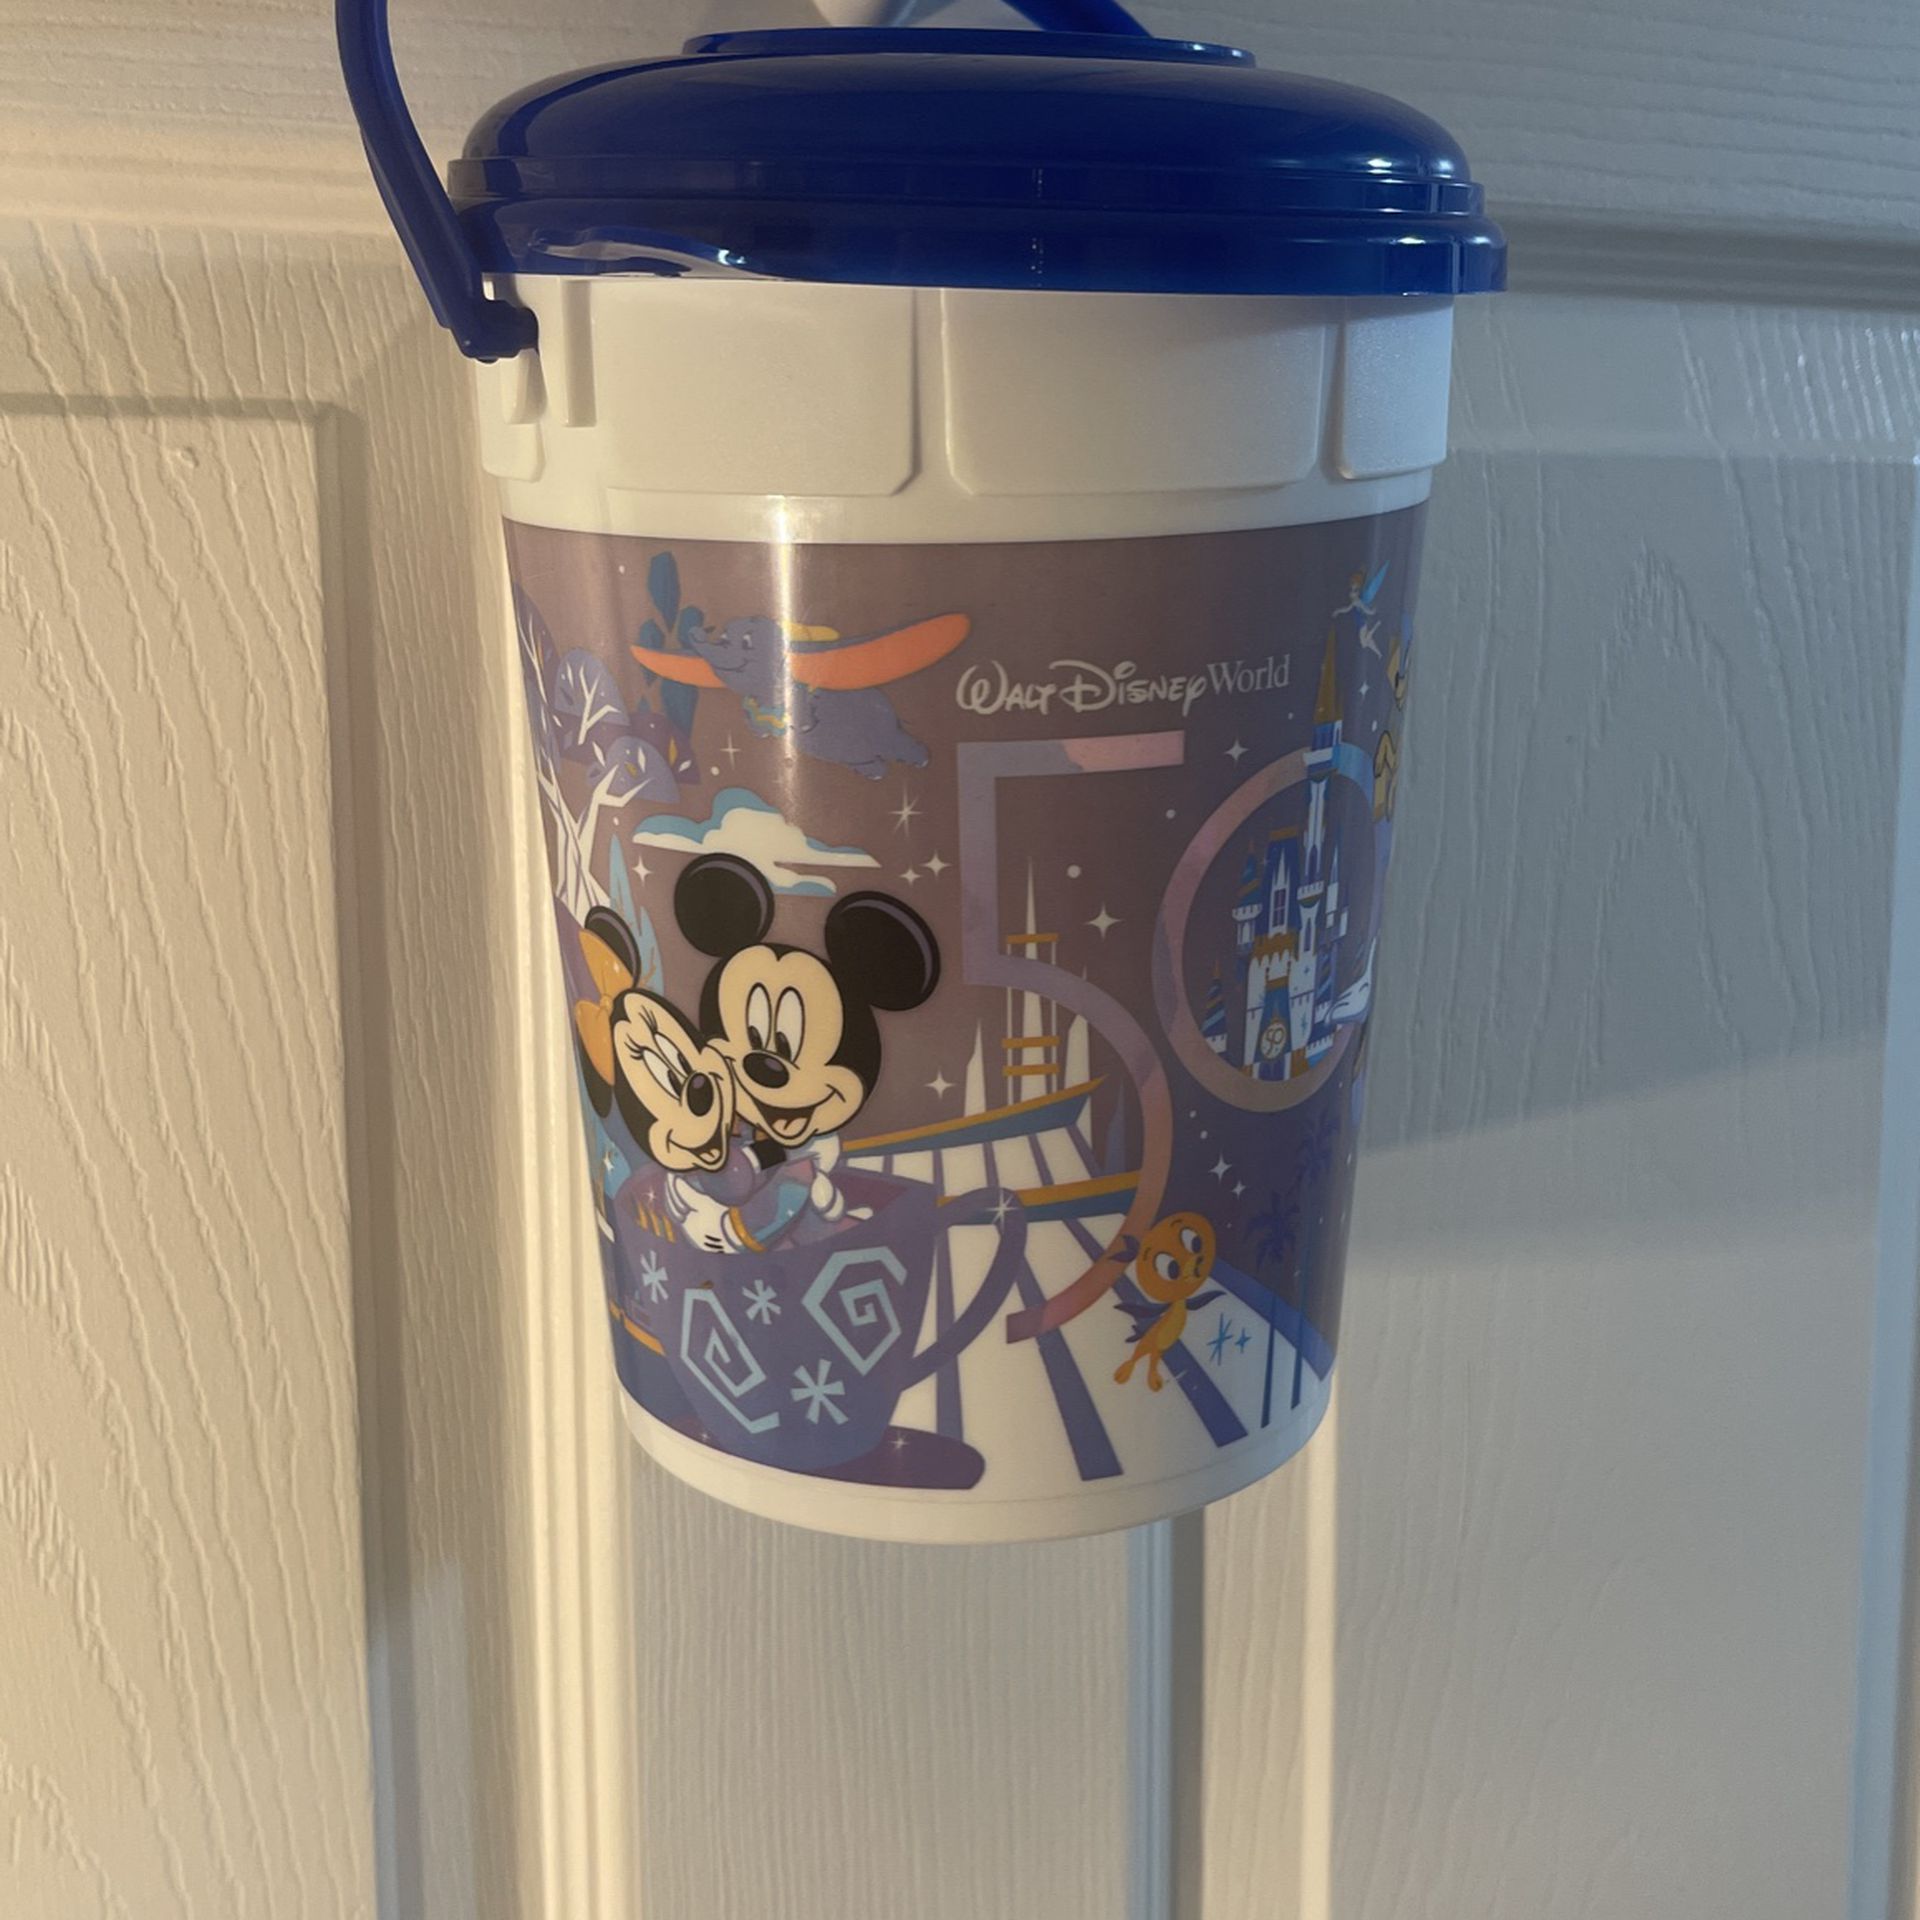 2021/2022 Disney 50th Anniversary Popcorn Bucket 